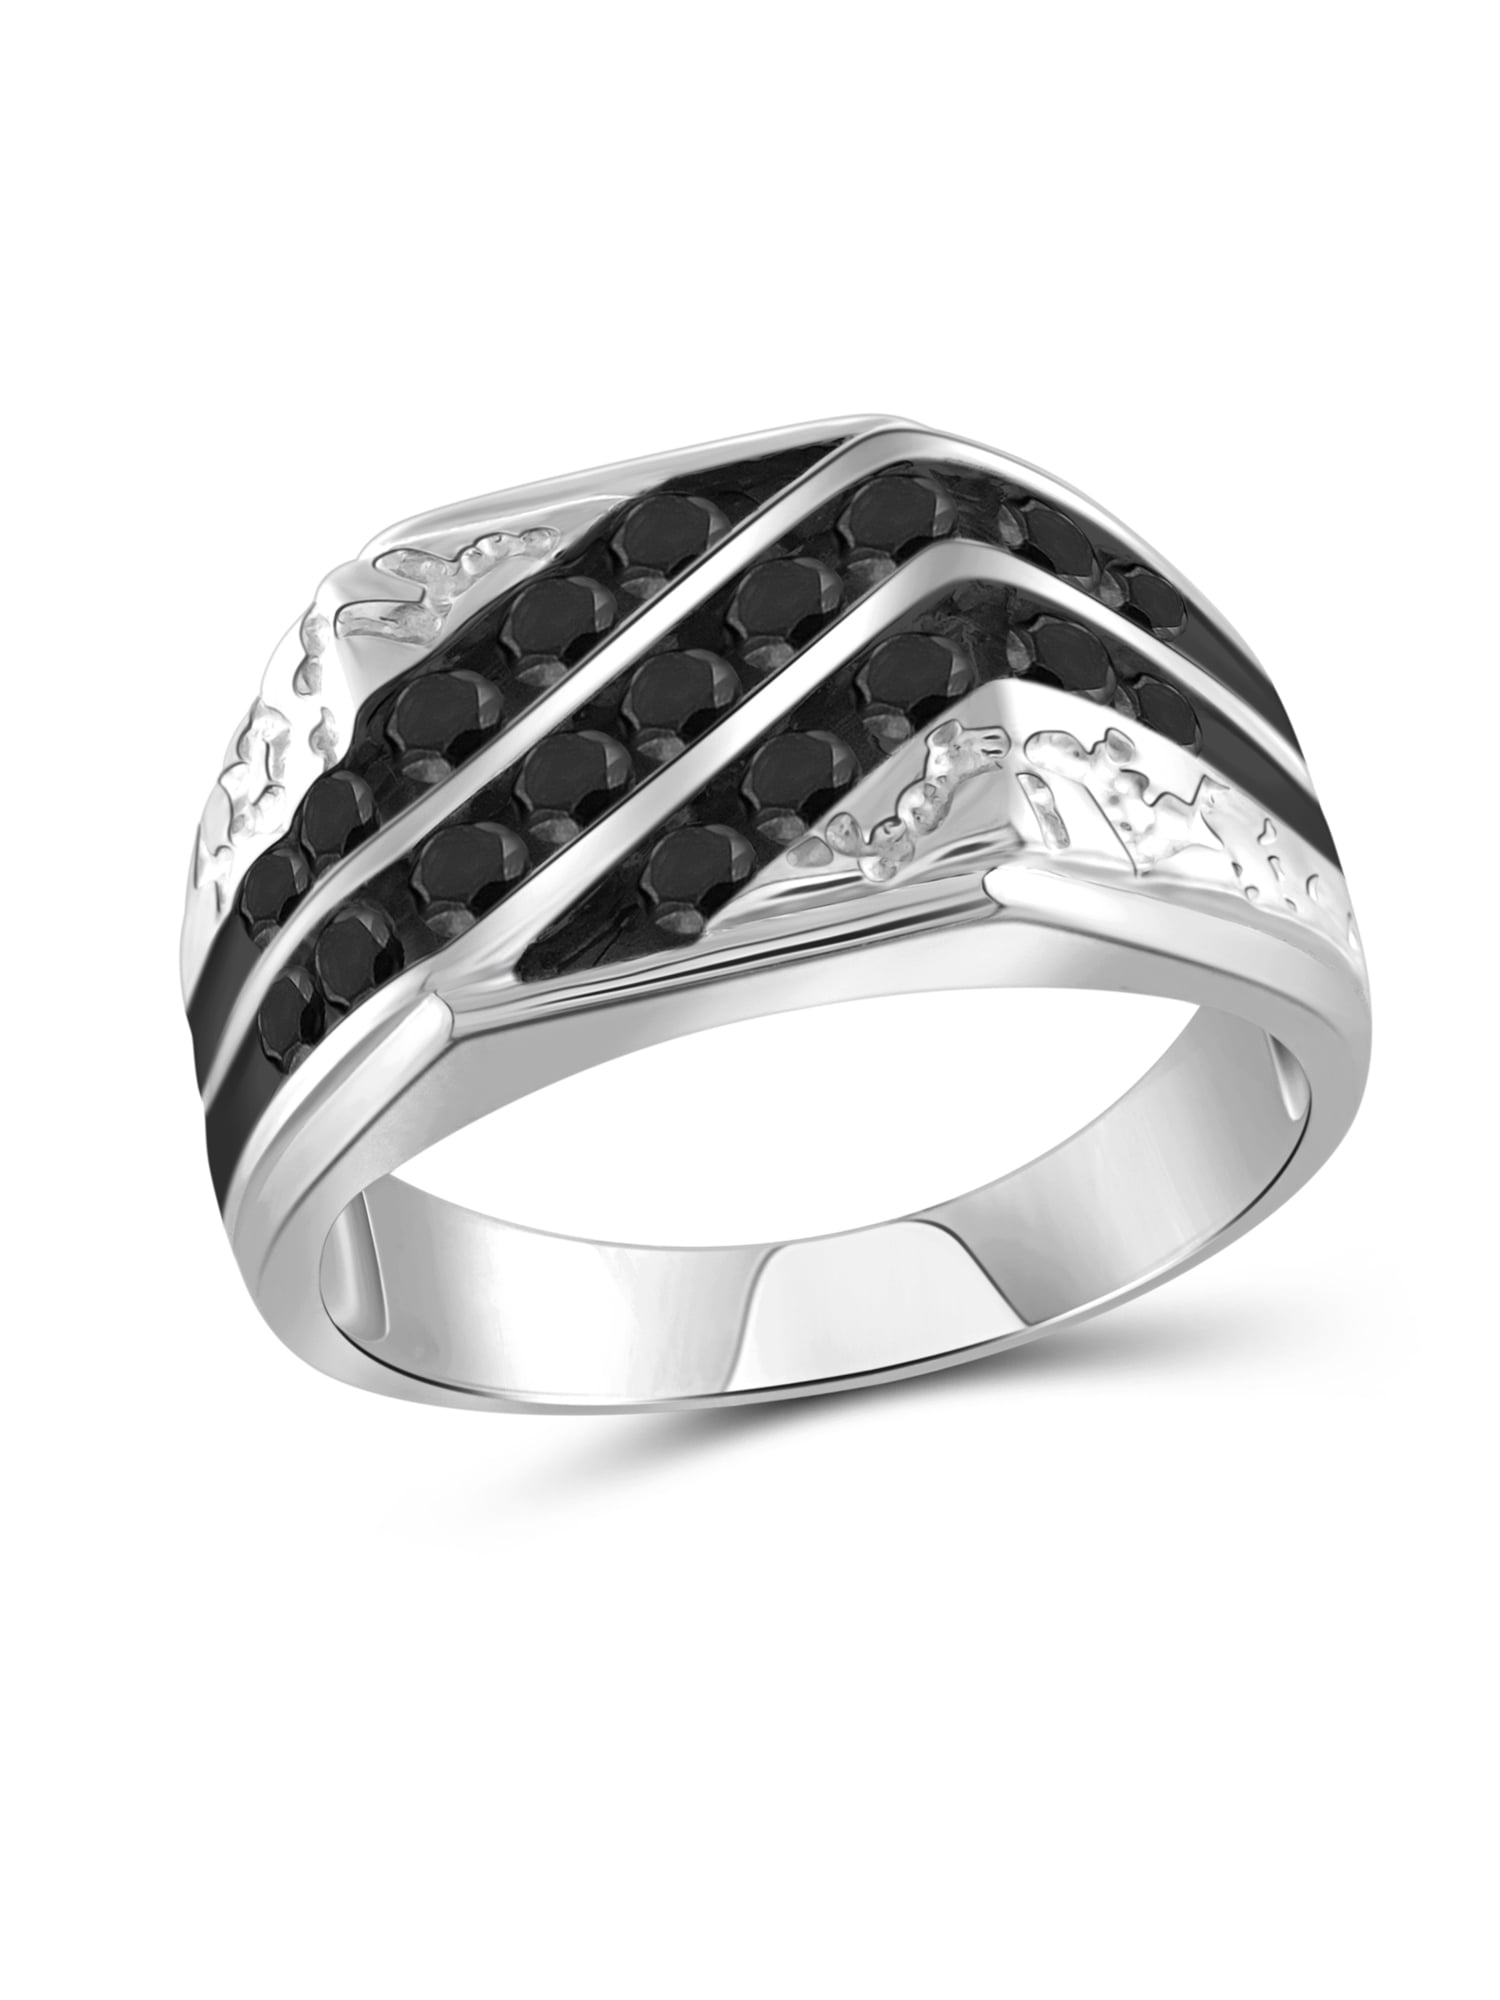 Men's Three Stone Black Diamond Celtic Wedding Band Ring